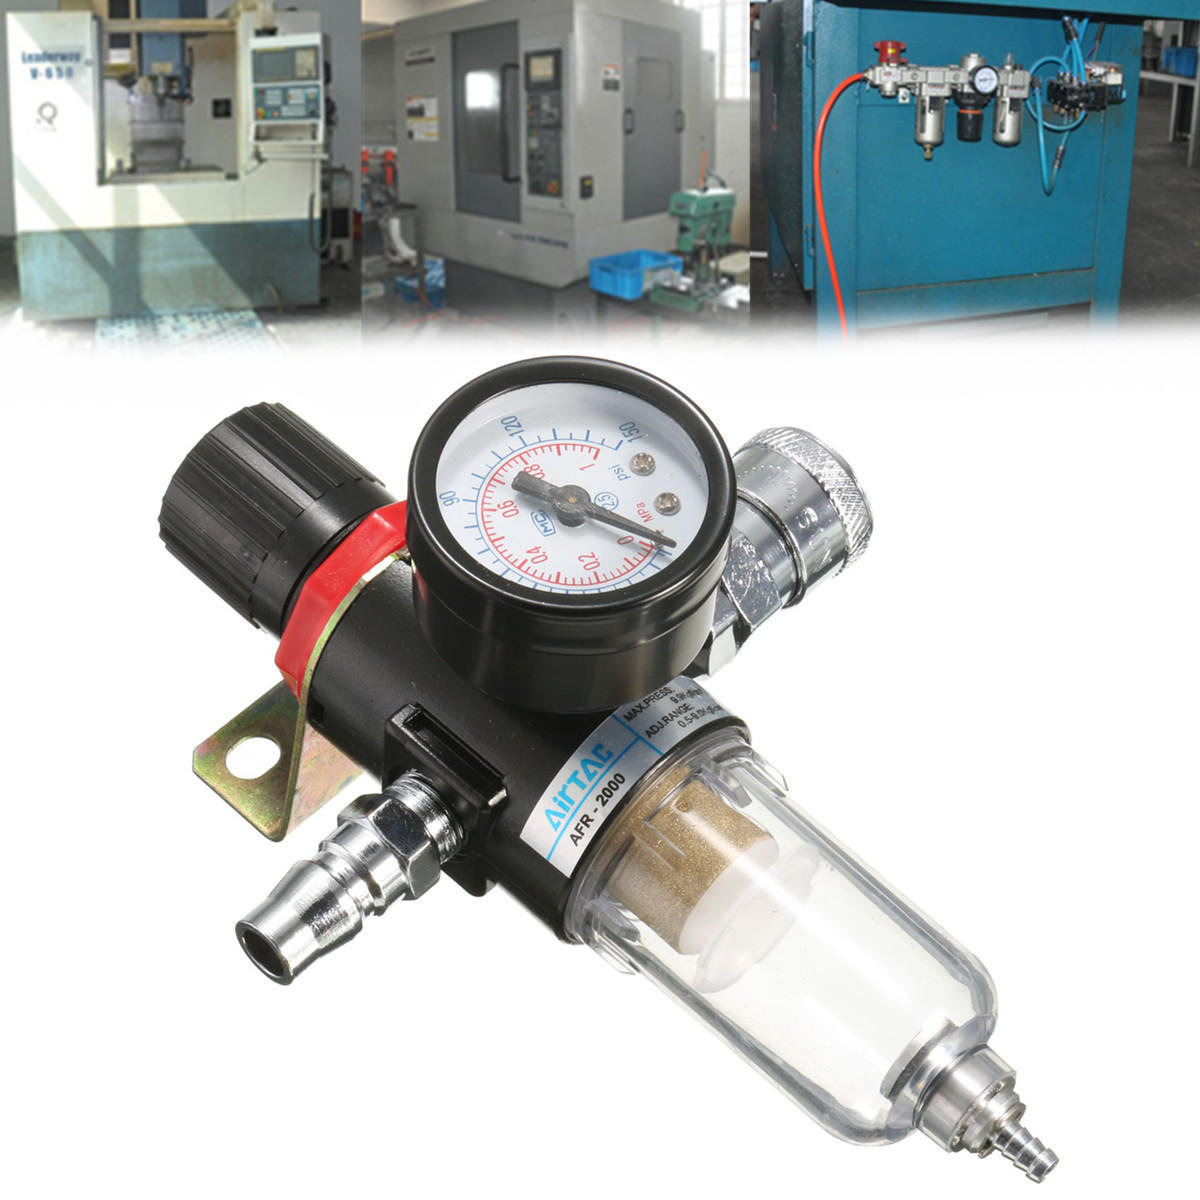 AFR-2000 1/4 "luchtcompressorfilter waterafscheider opvanggereedschap regelventielmeter